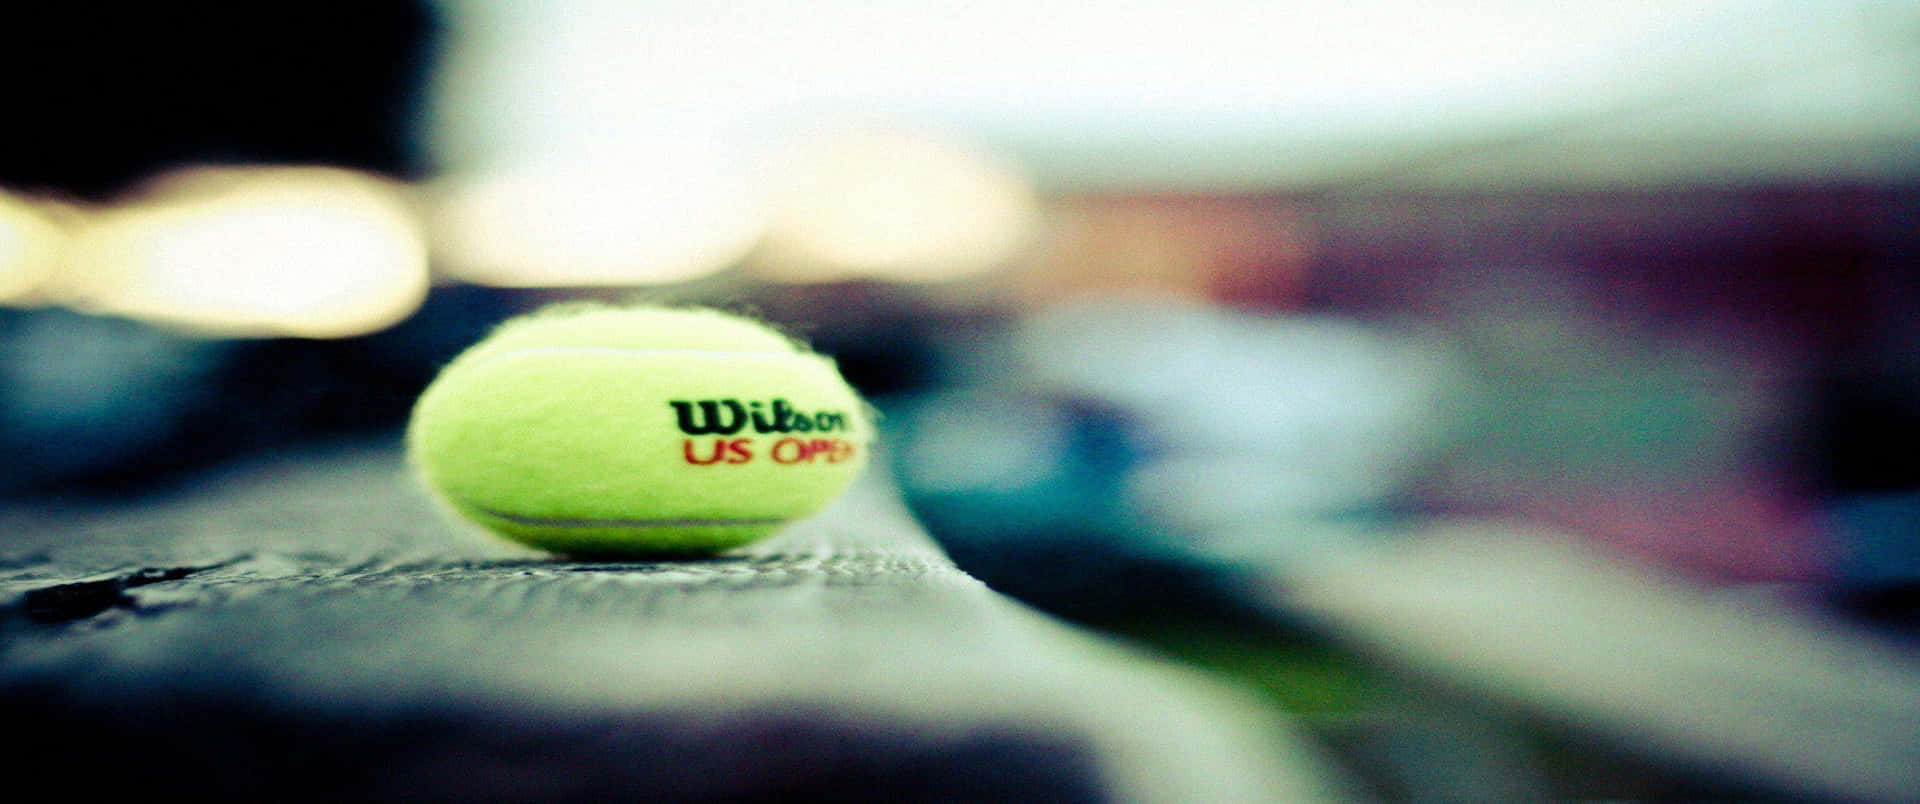 A Tennis Ball On A Wooden Bench